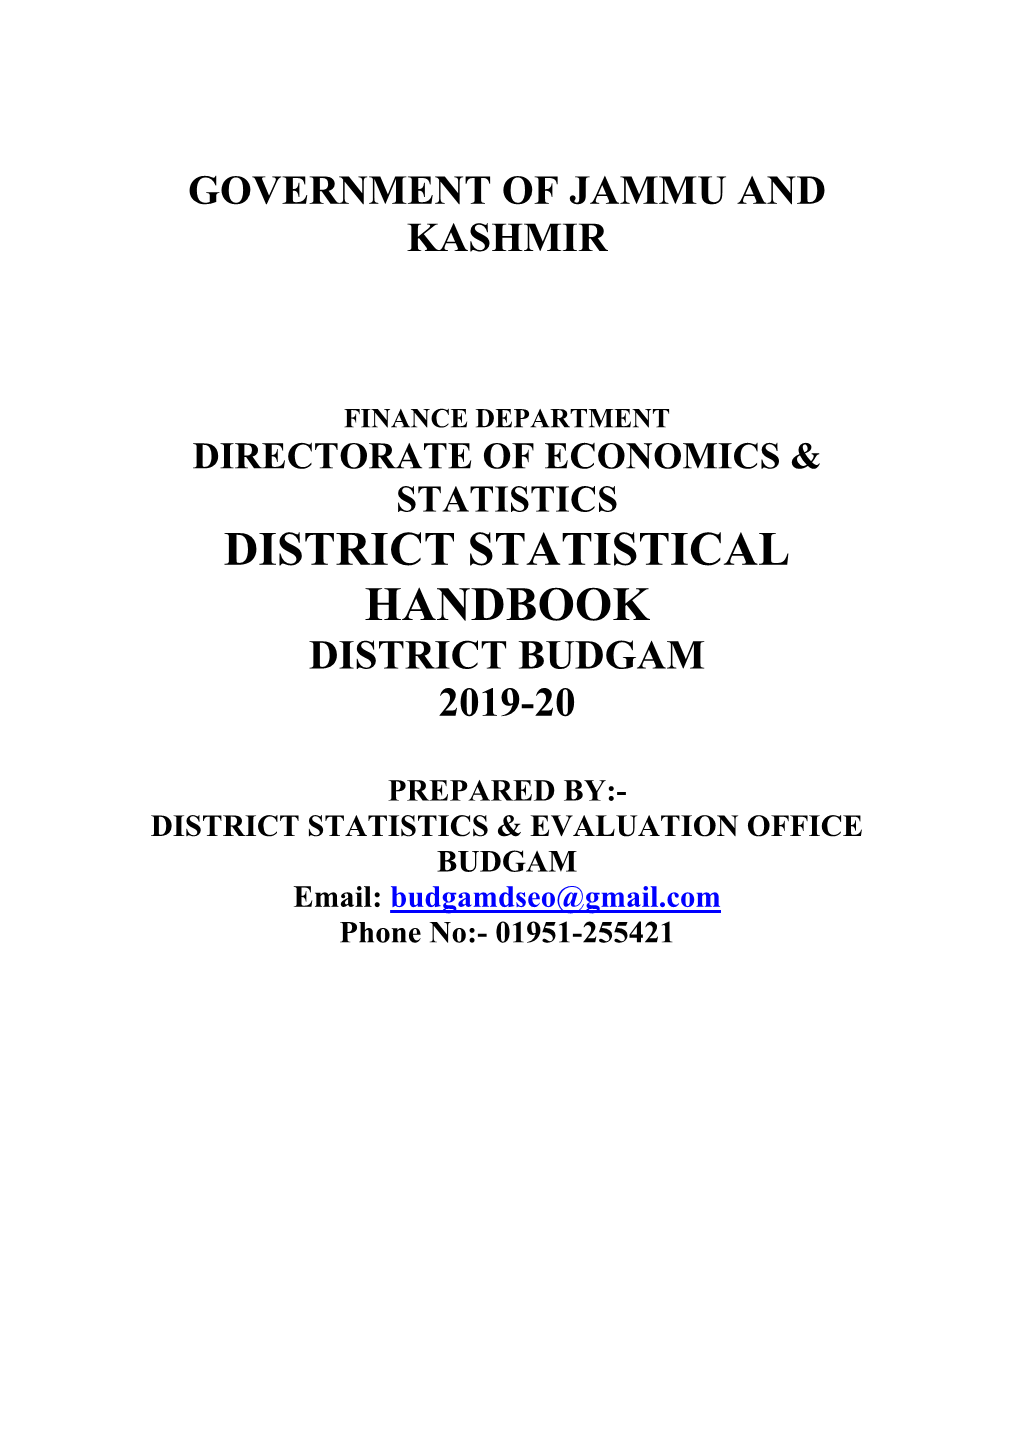 Economic Review of District Budgam